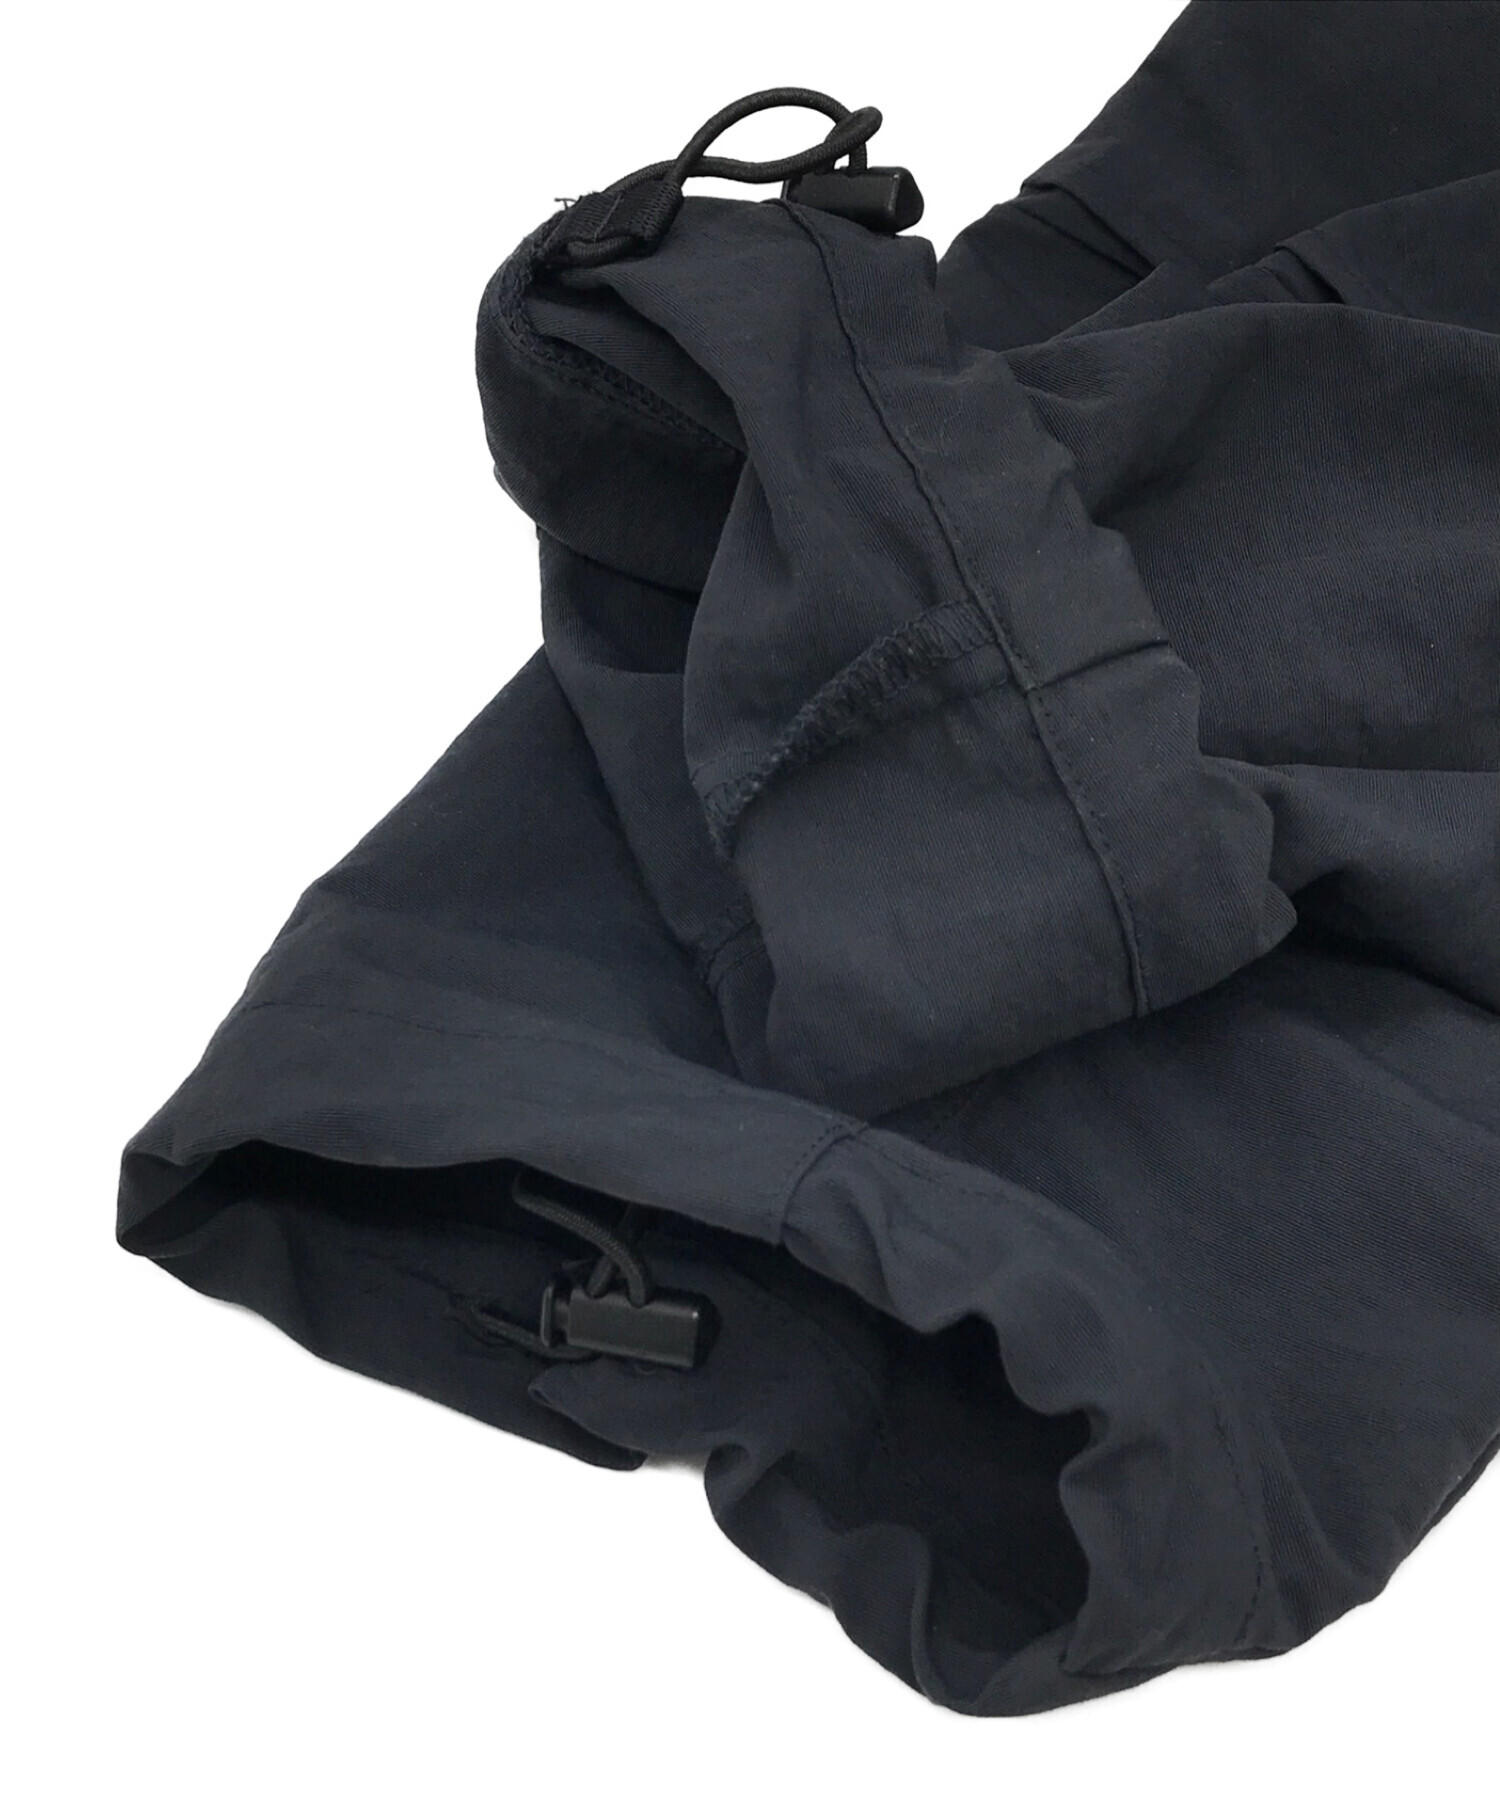 GOOPIMADE (グーピーメイド) ジャケット ブラック サイズ:1